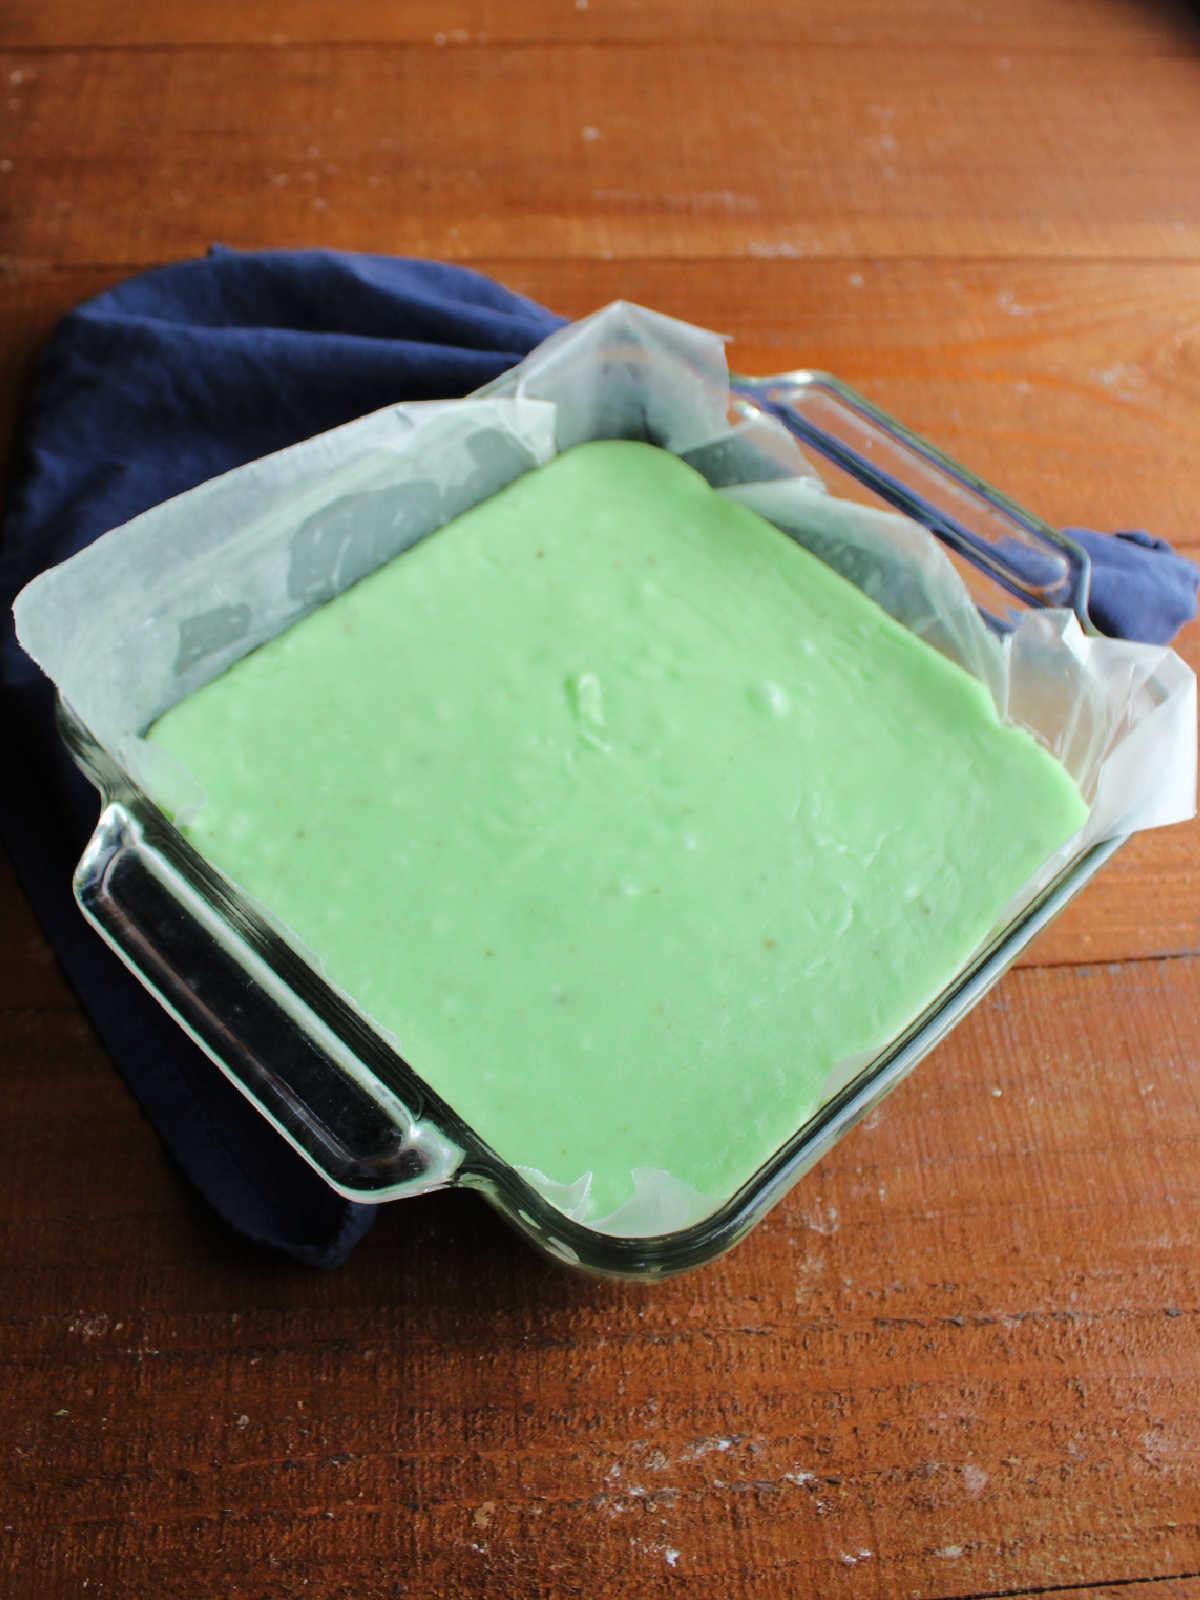 Square pan with green jello fudge inside.